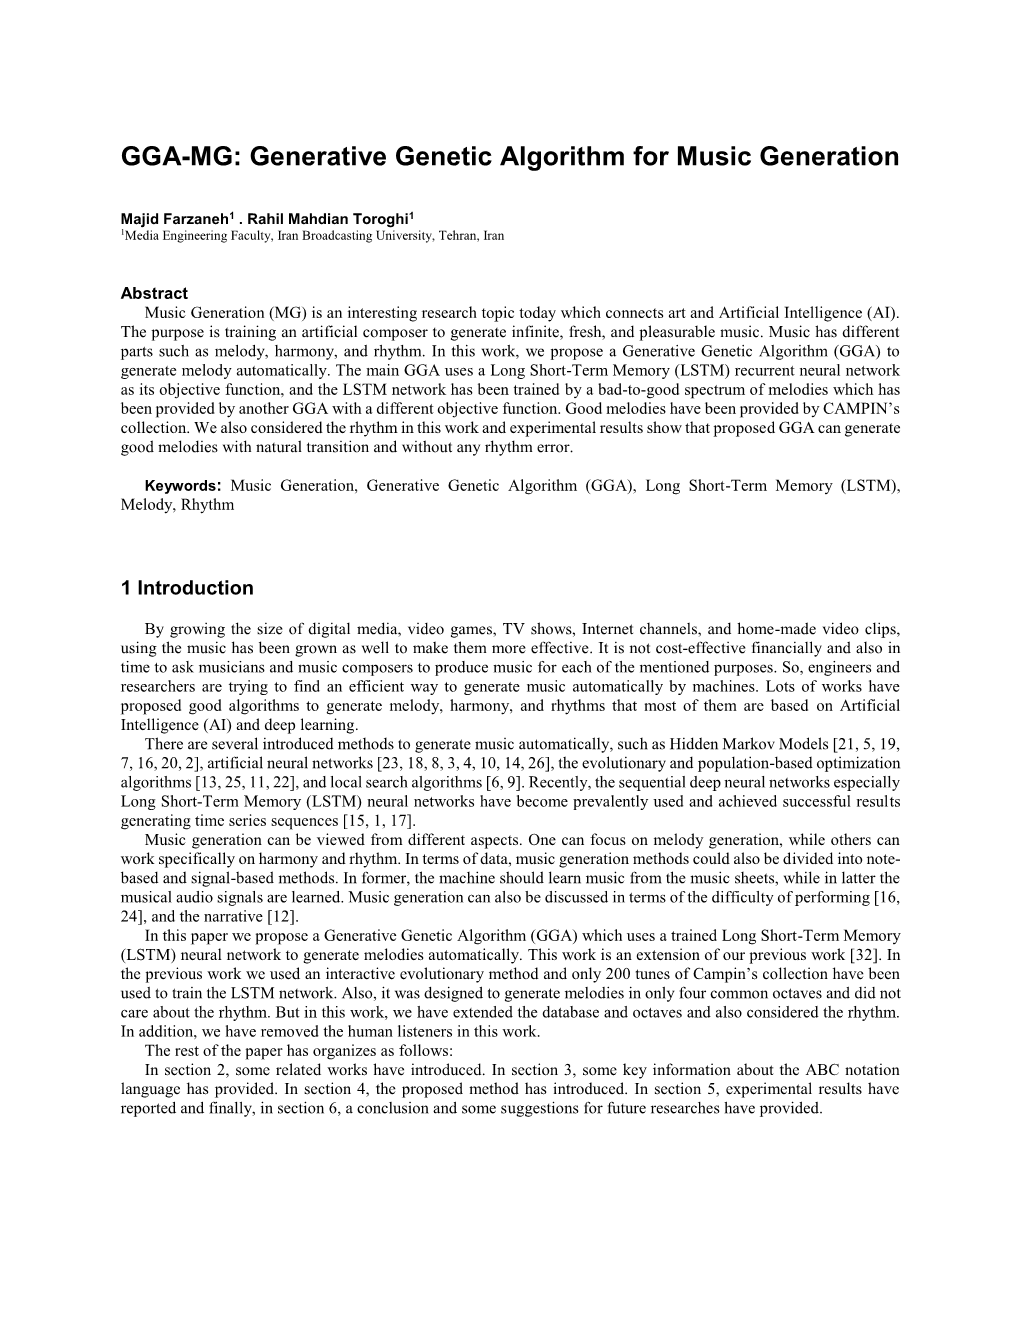 Generative Genetic Algorithm for Music Generation